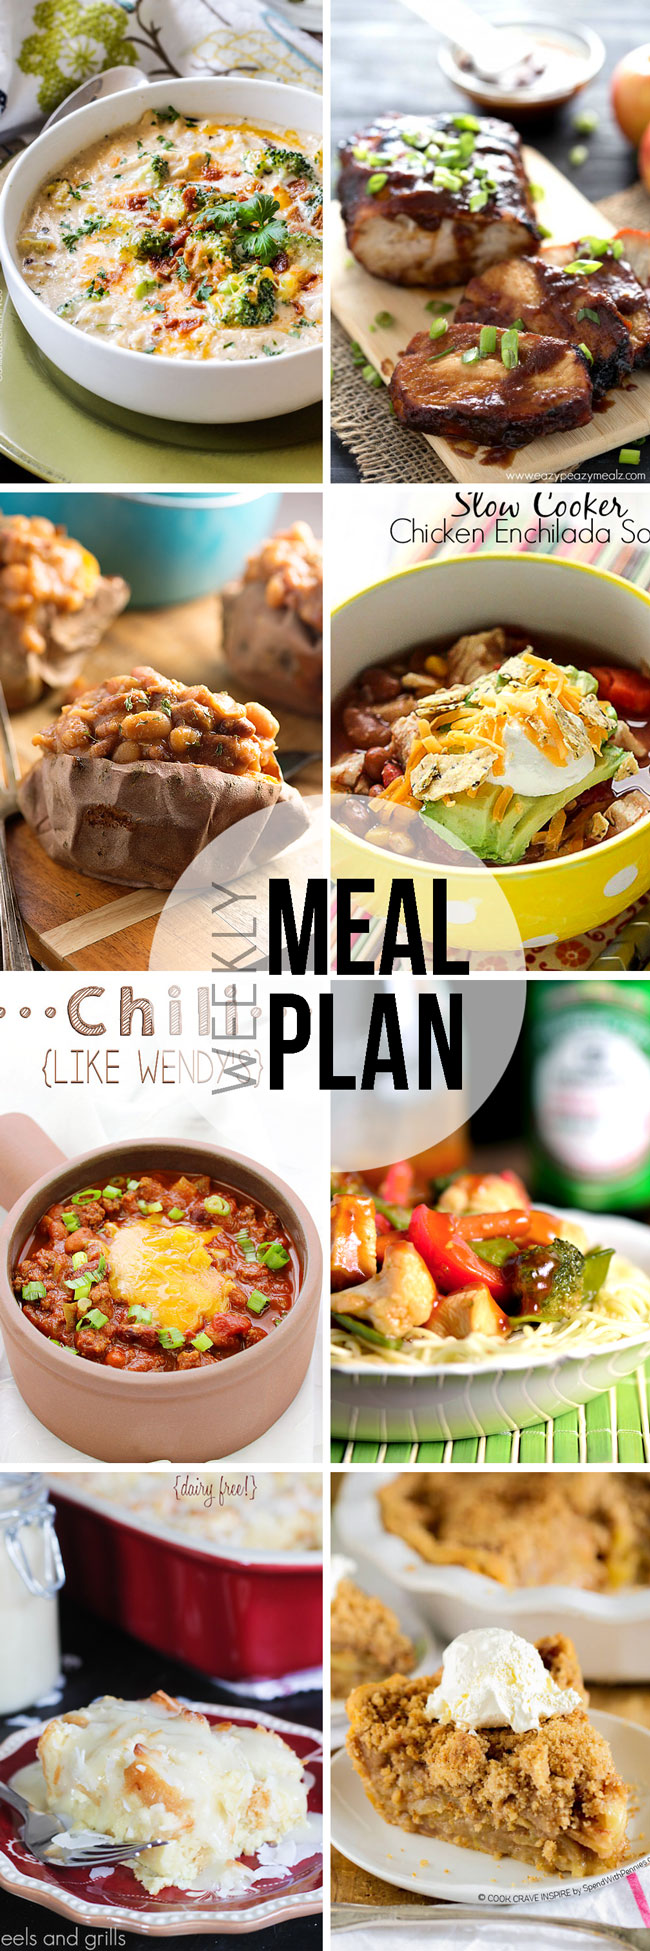 Meal-Plan---Pinterest-31